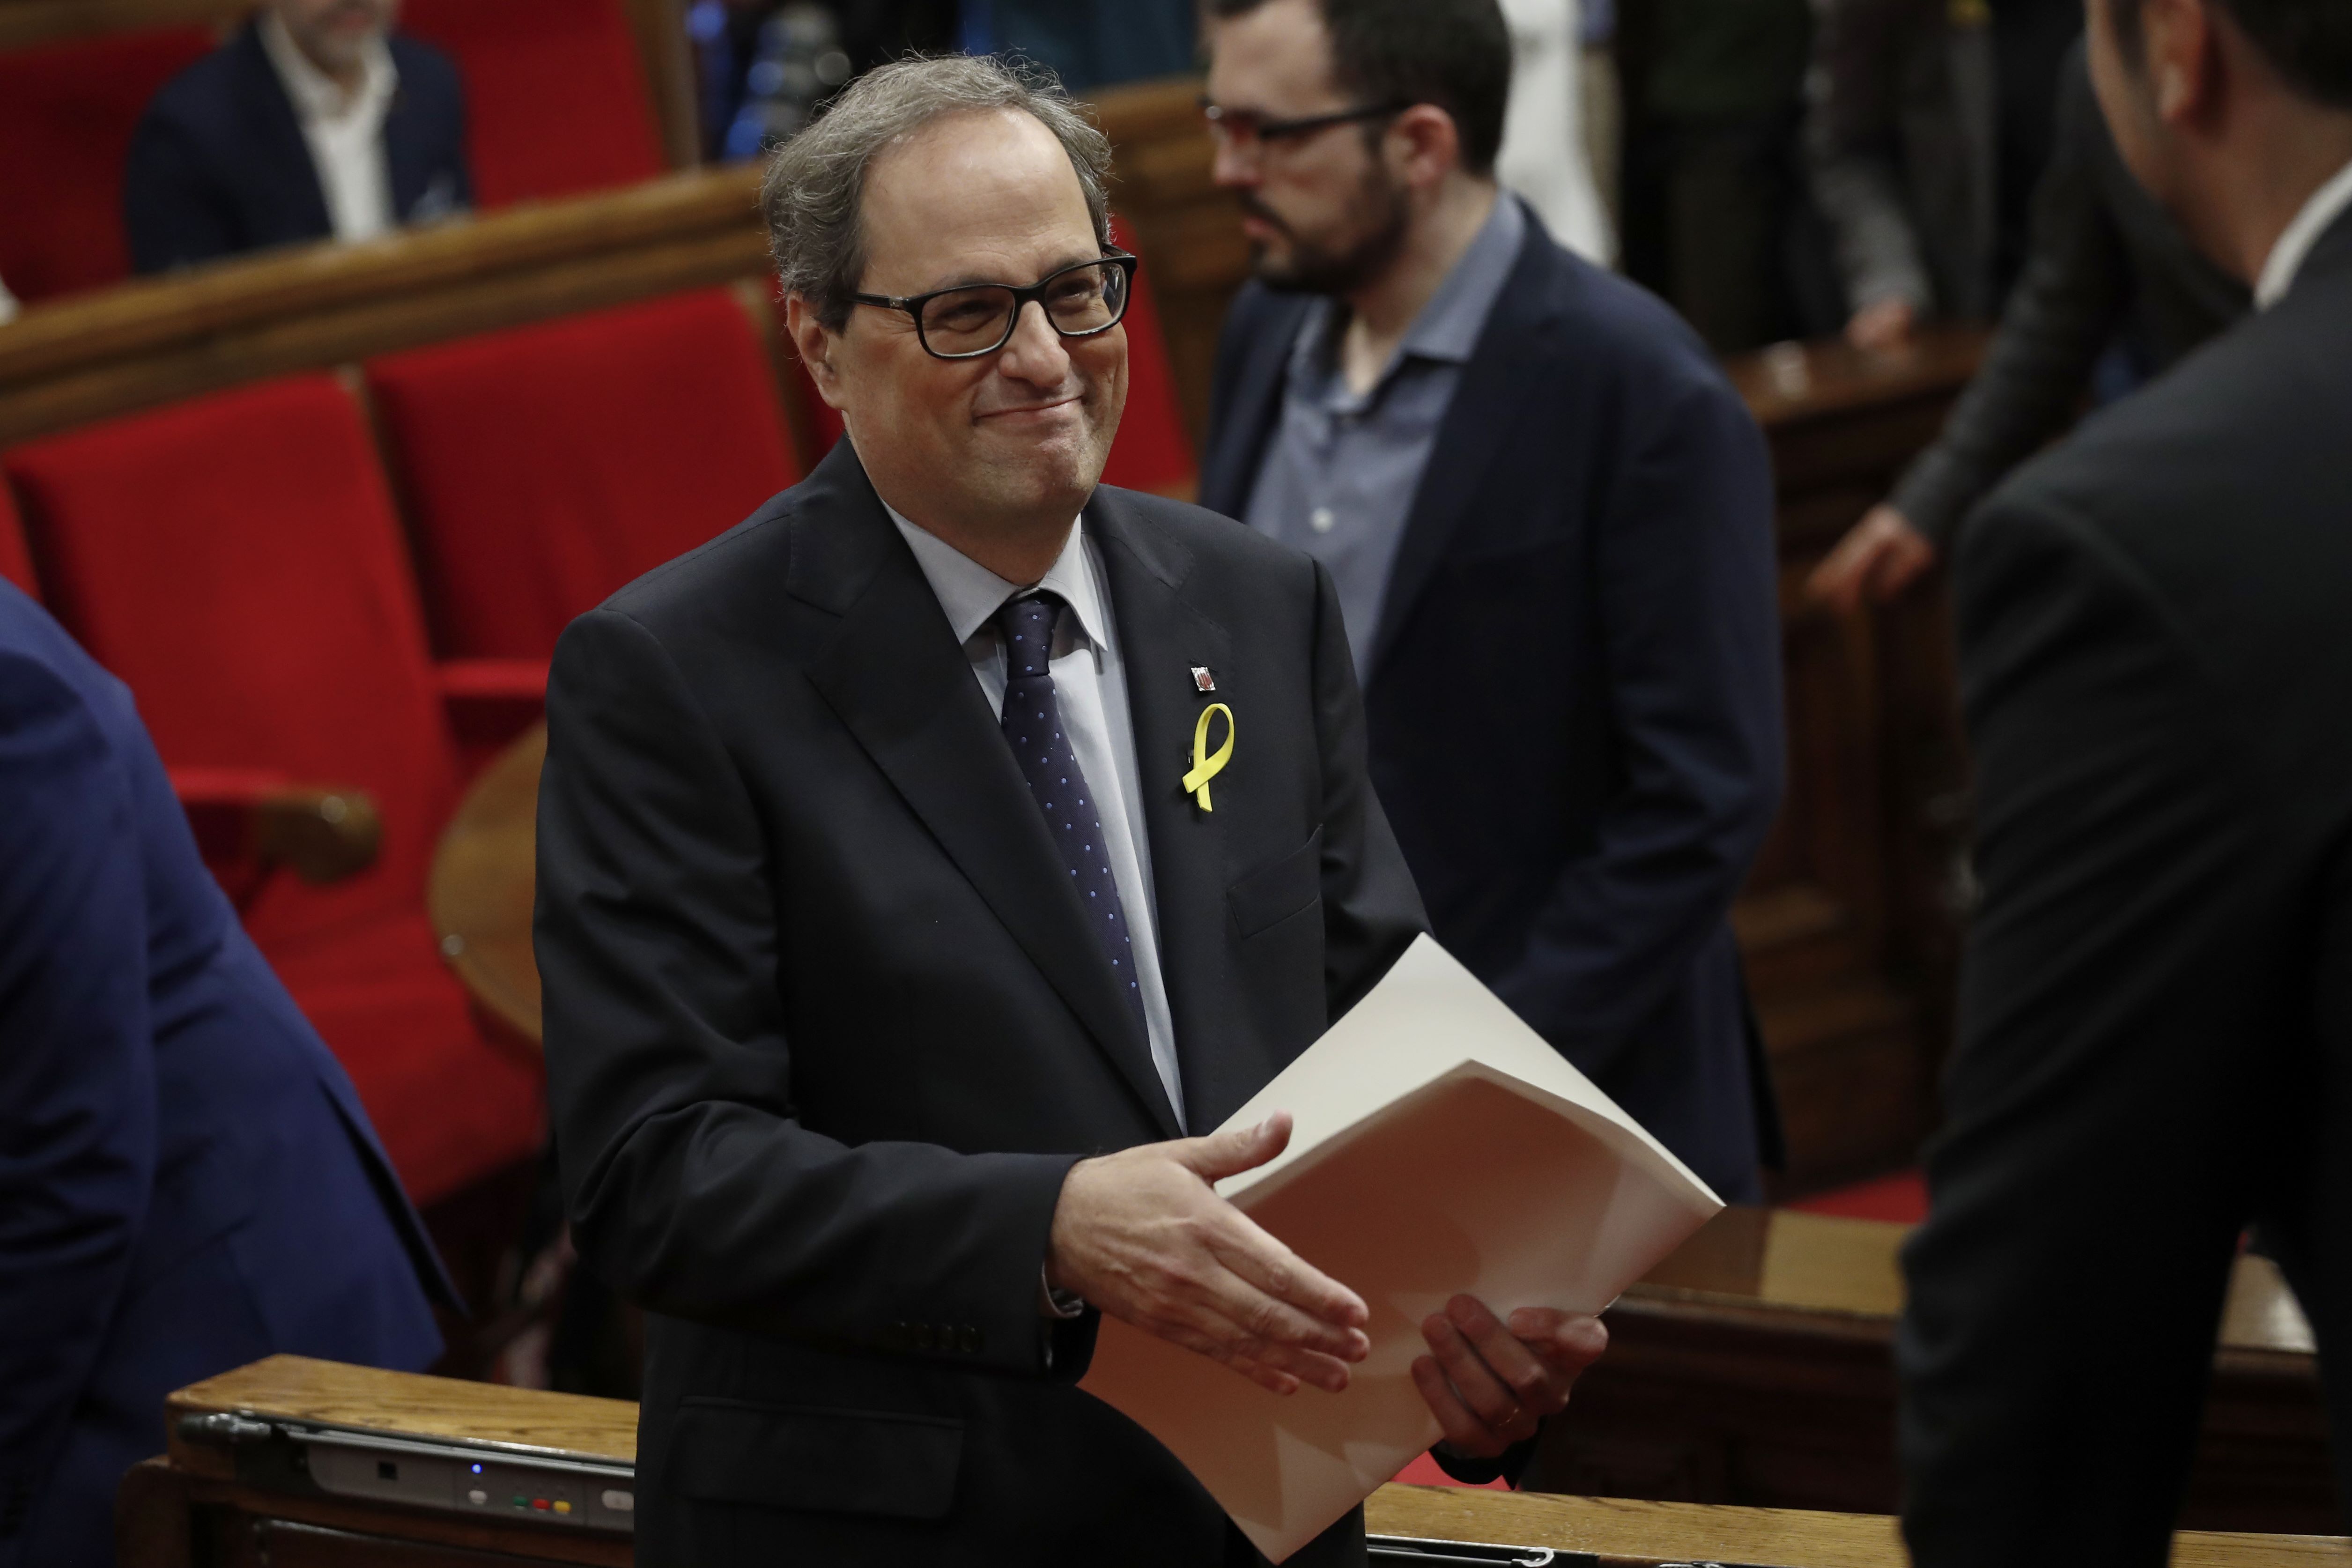 Candidato a presidente catalán reivindica a Puigdemont y asegura que impulsará un “proceso constituyente”